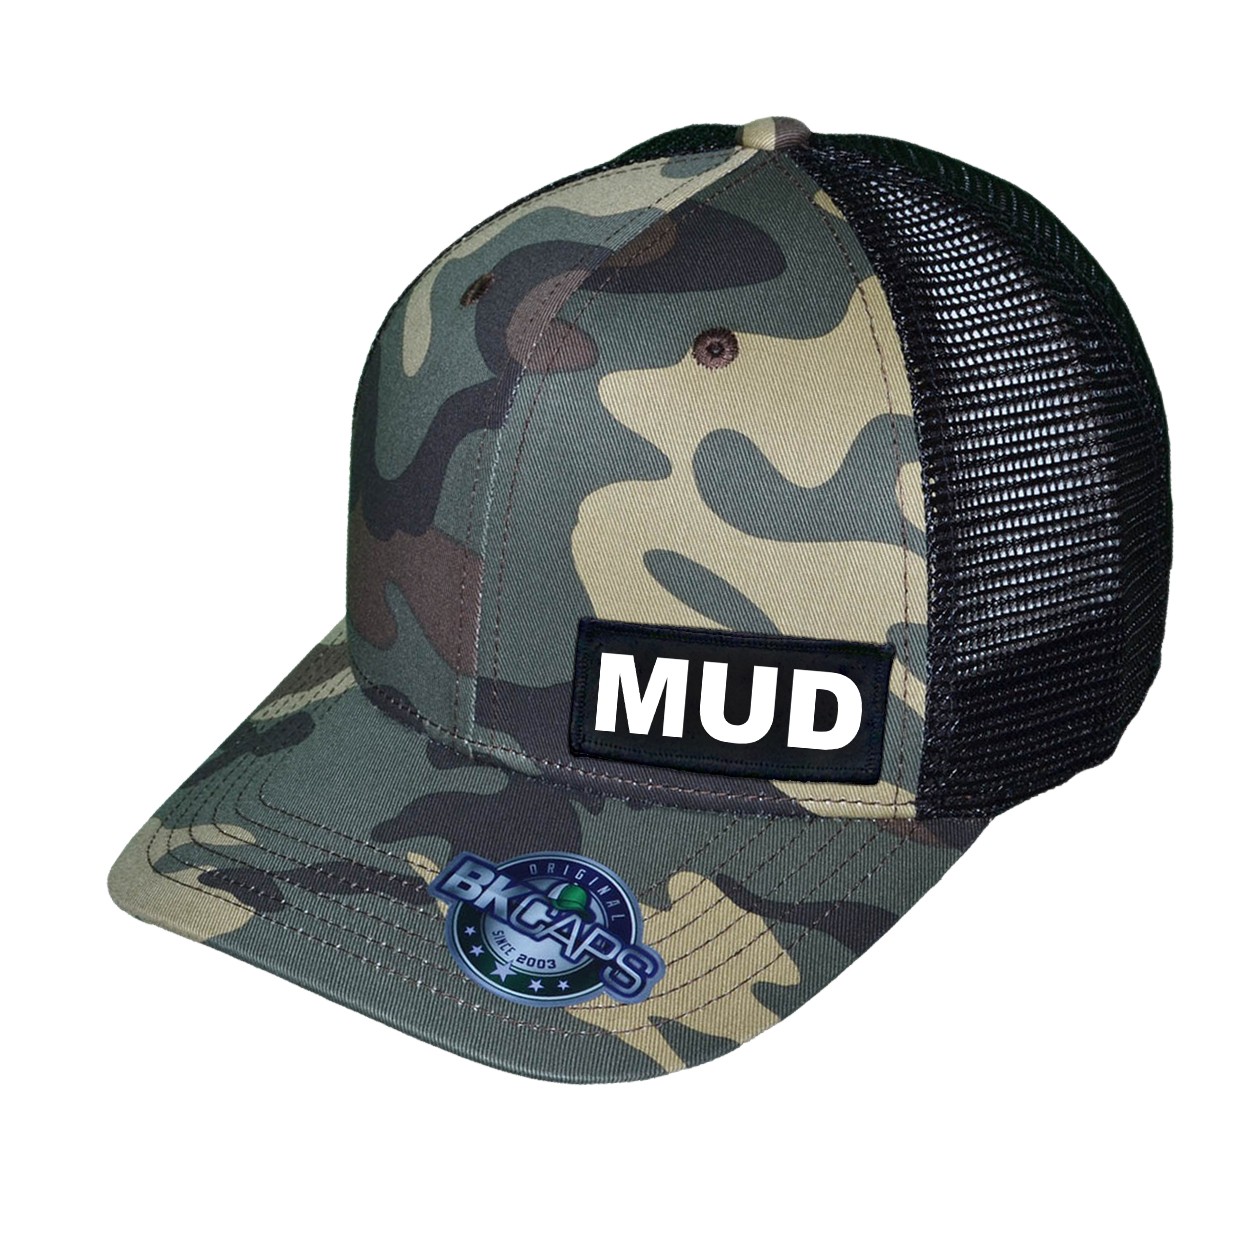 Mud Brand Logo Night Out Woven Patch Snapback Trucker Hat Khaki/Camo (White Logo)